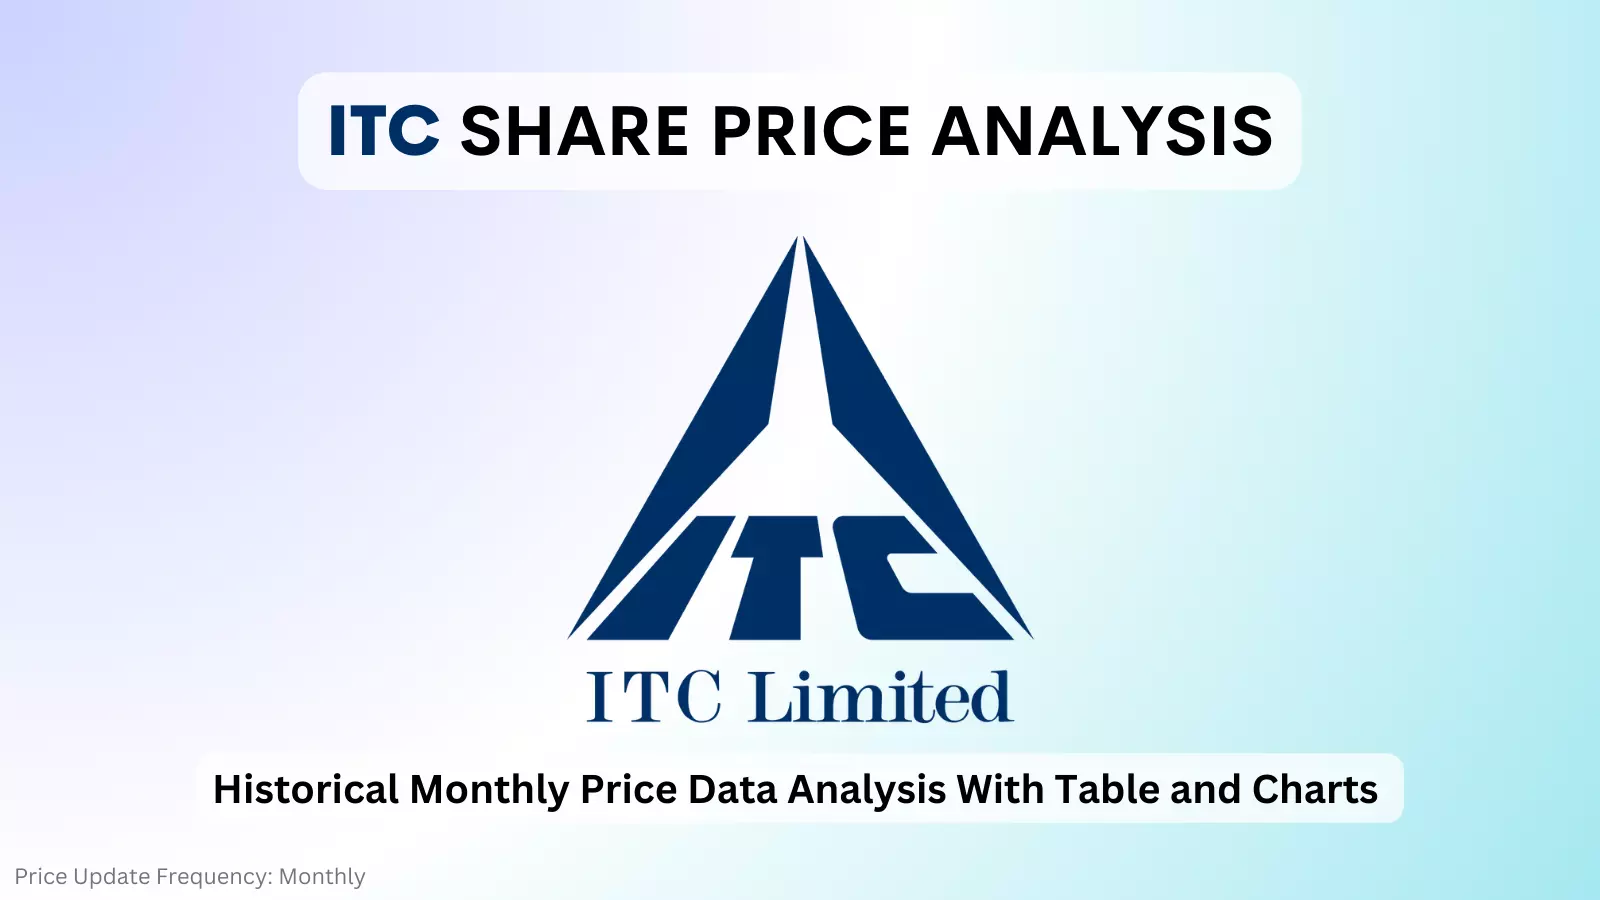 ITC share price analysis